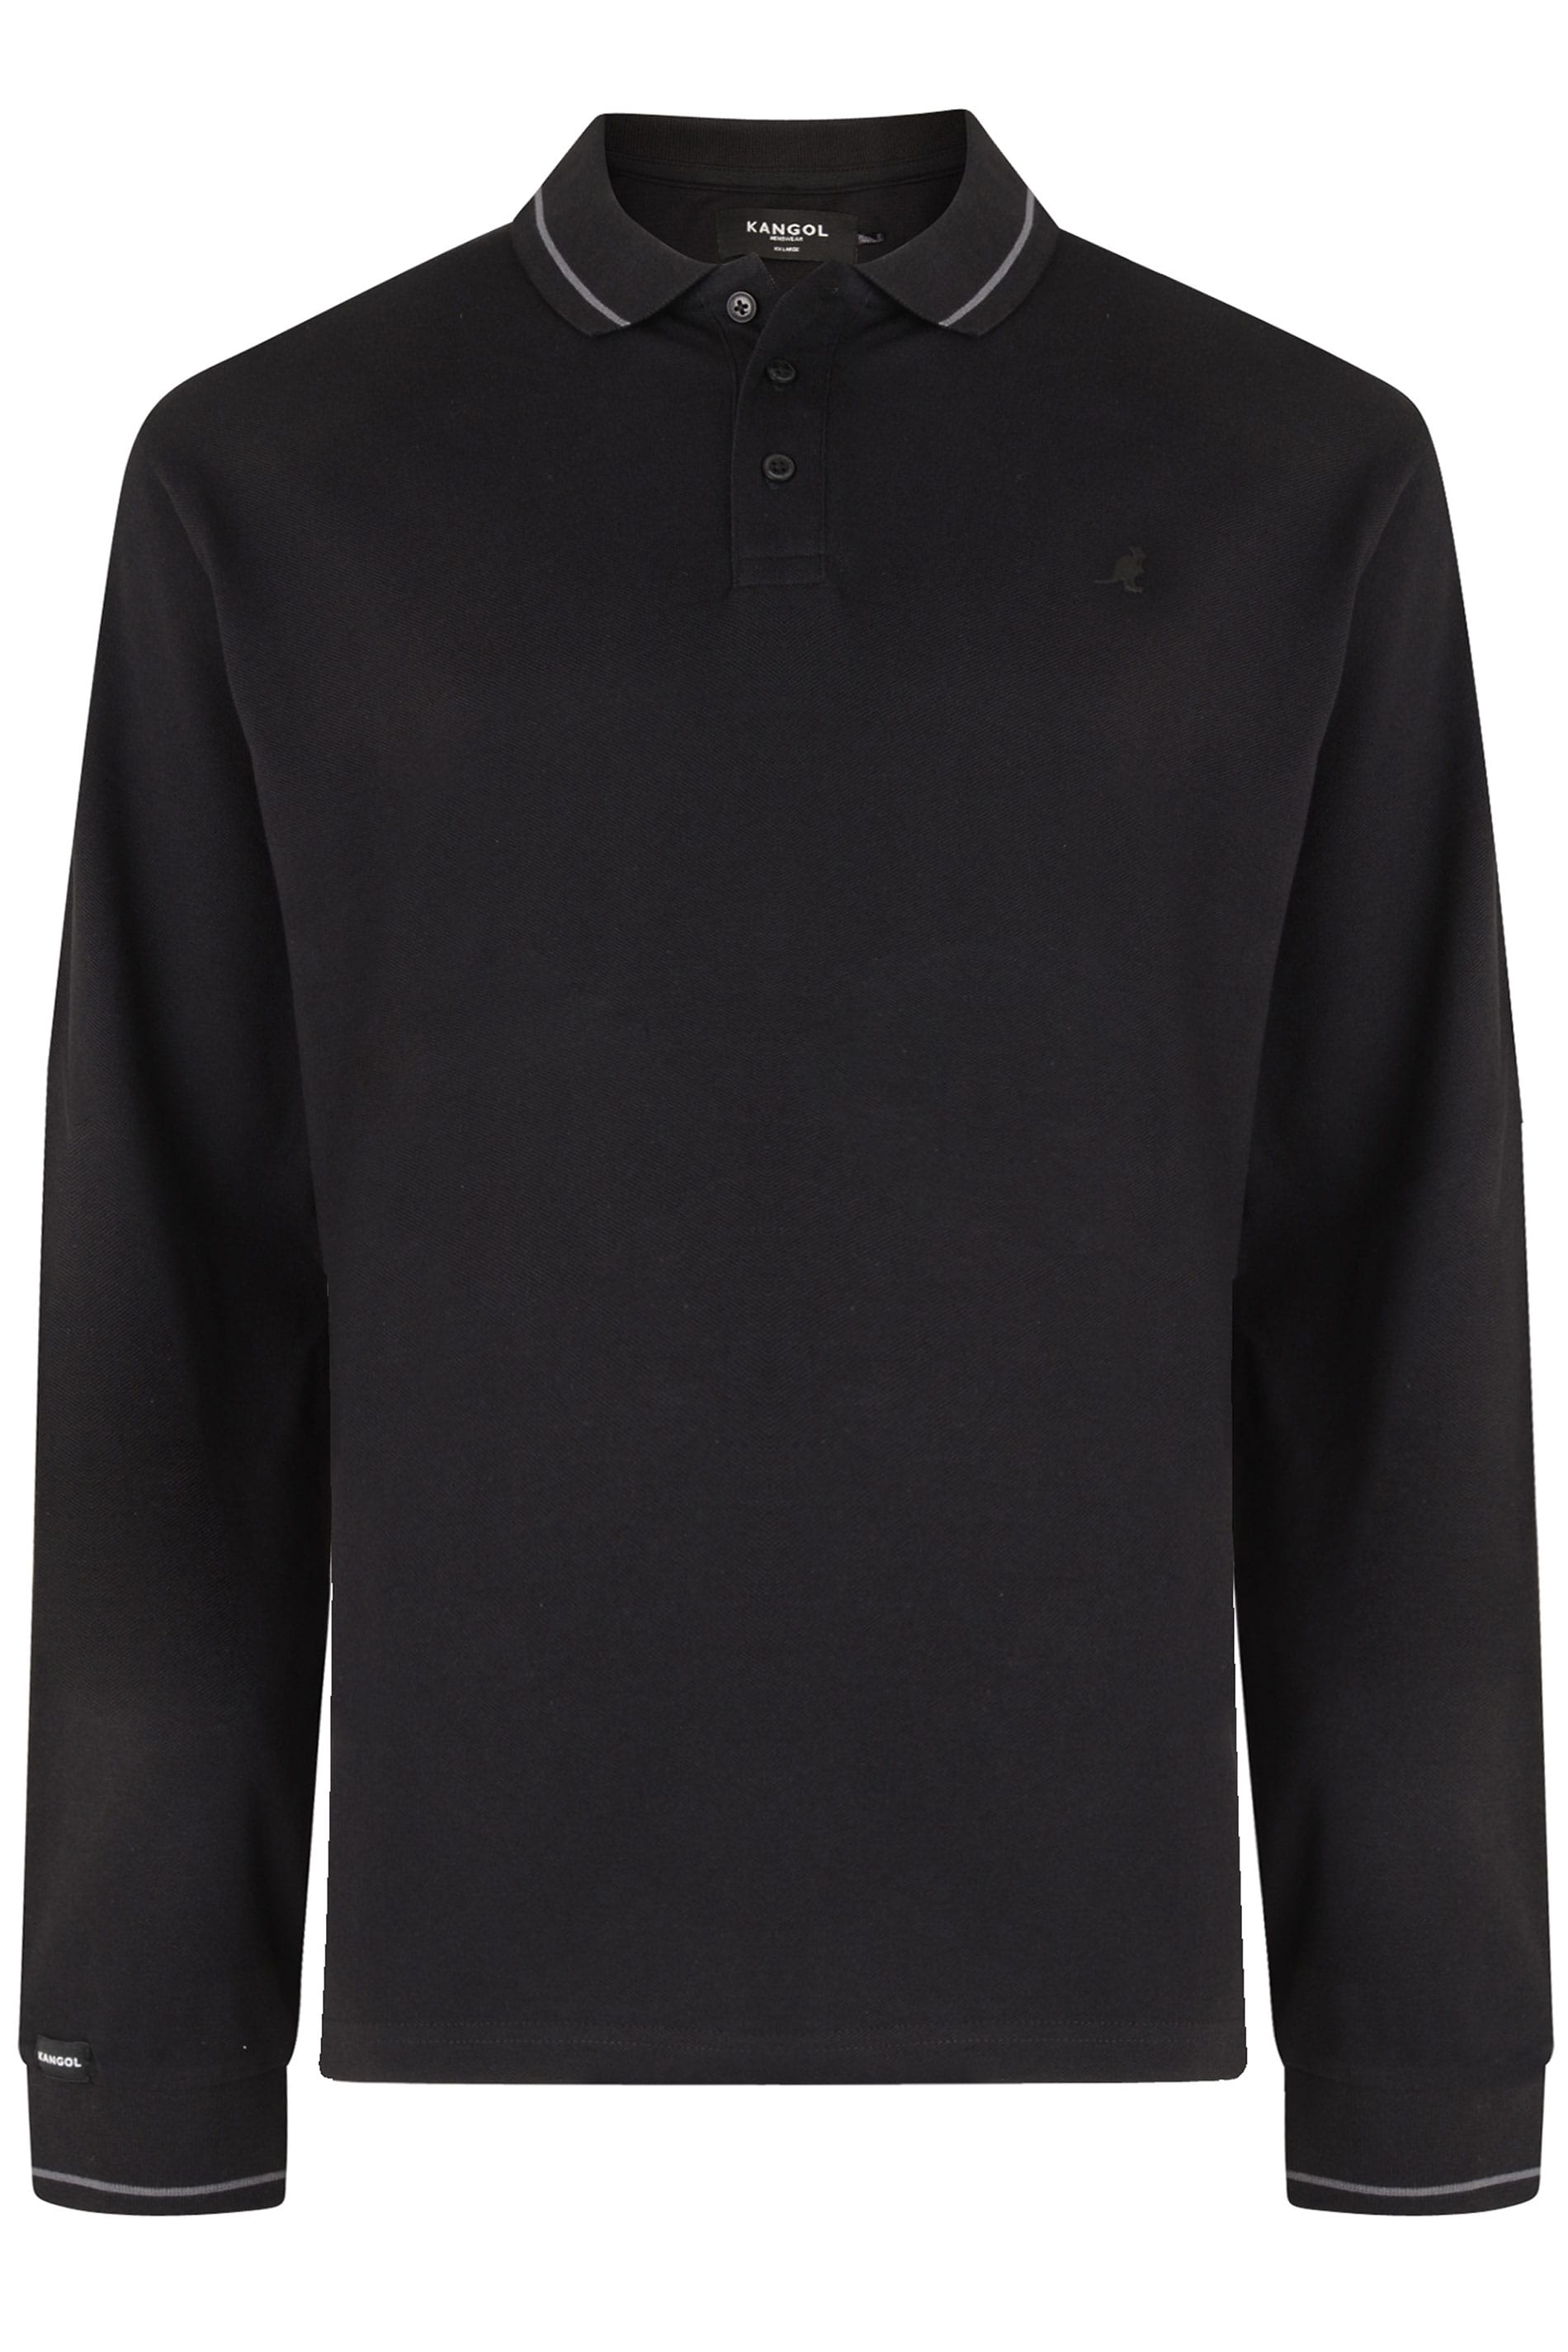 KANGOL Black Long Sleeved Polo Shirt | BadRhino | BadRhino